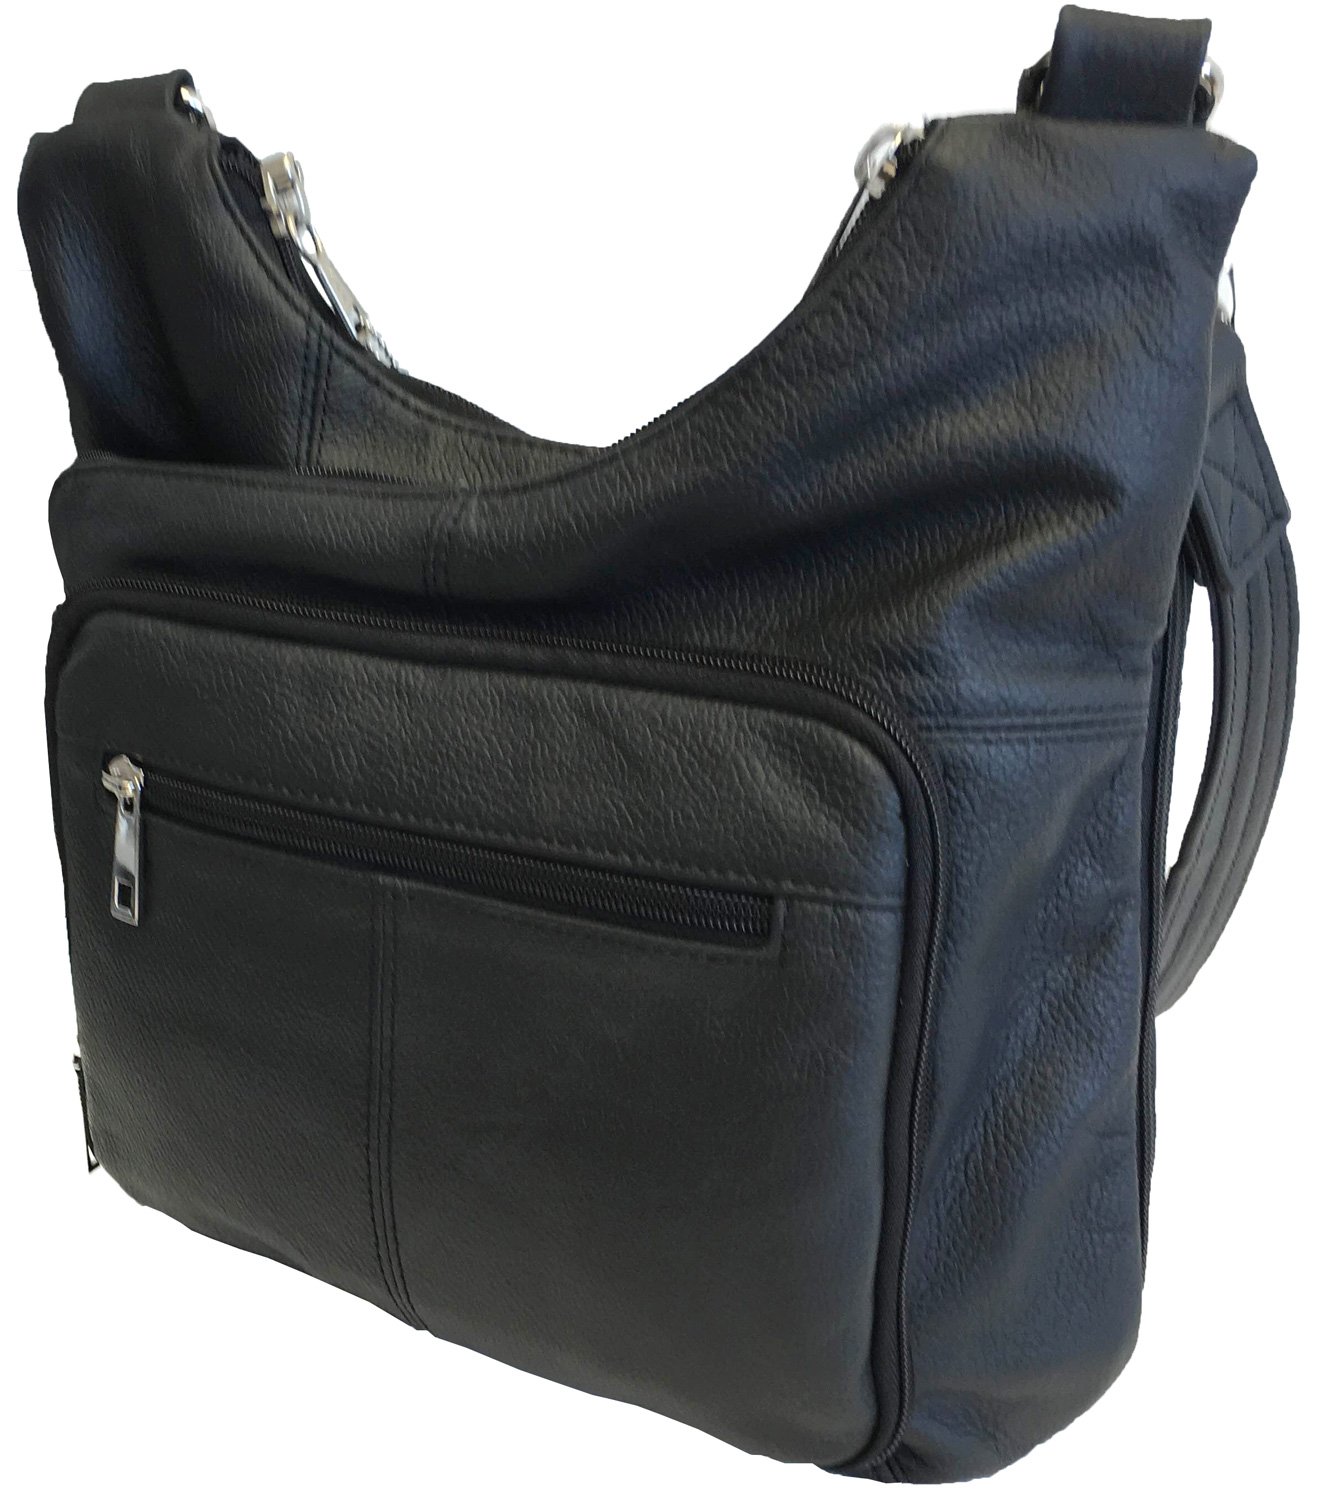 Genuine Leather Concealed Carry Gun Purse Concealment Bag CCW CWP ...